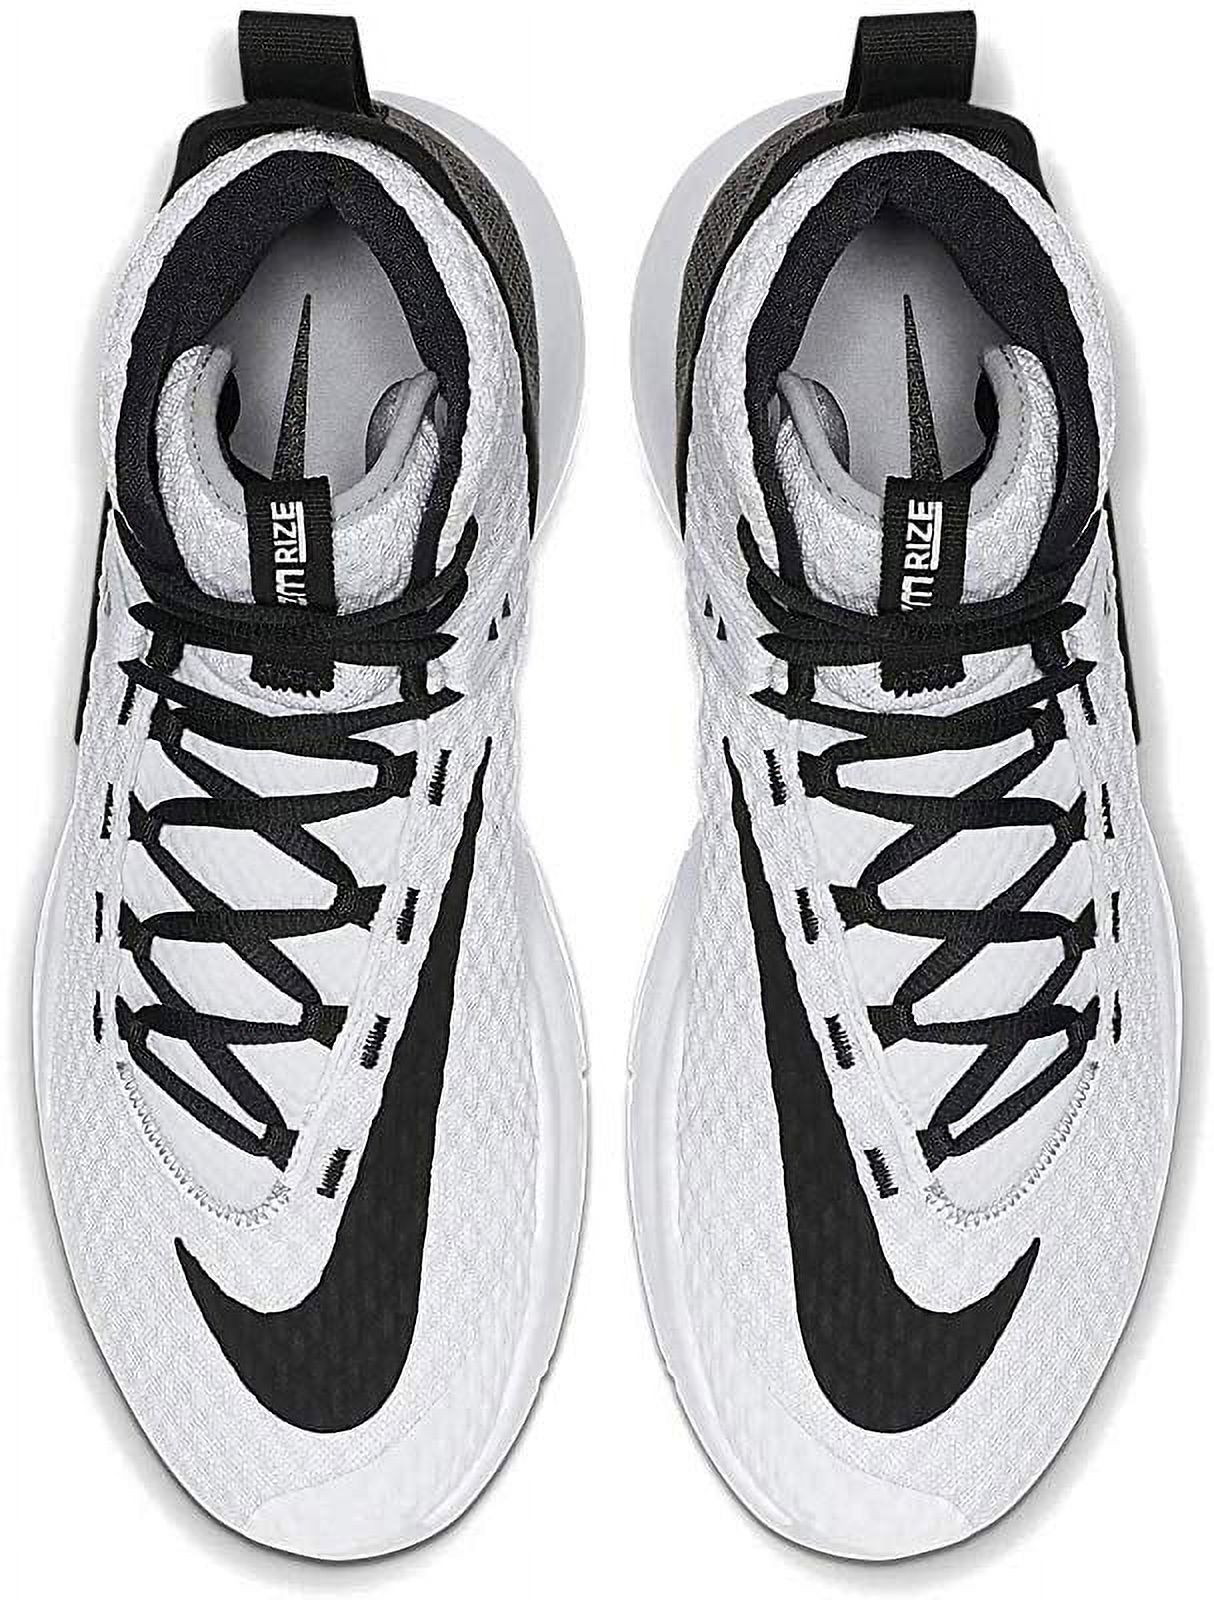 Nike Men's Zoom Rize TB Basketball Shoe, White/Black, 12.5 D(M) US - image 2 of 4